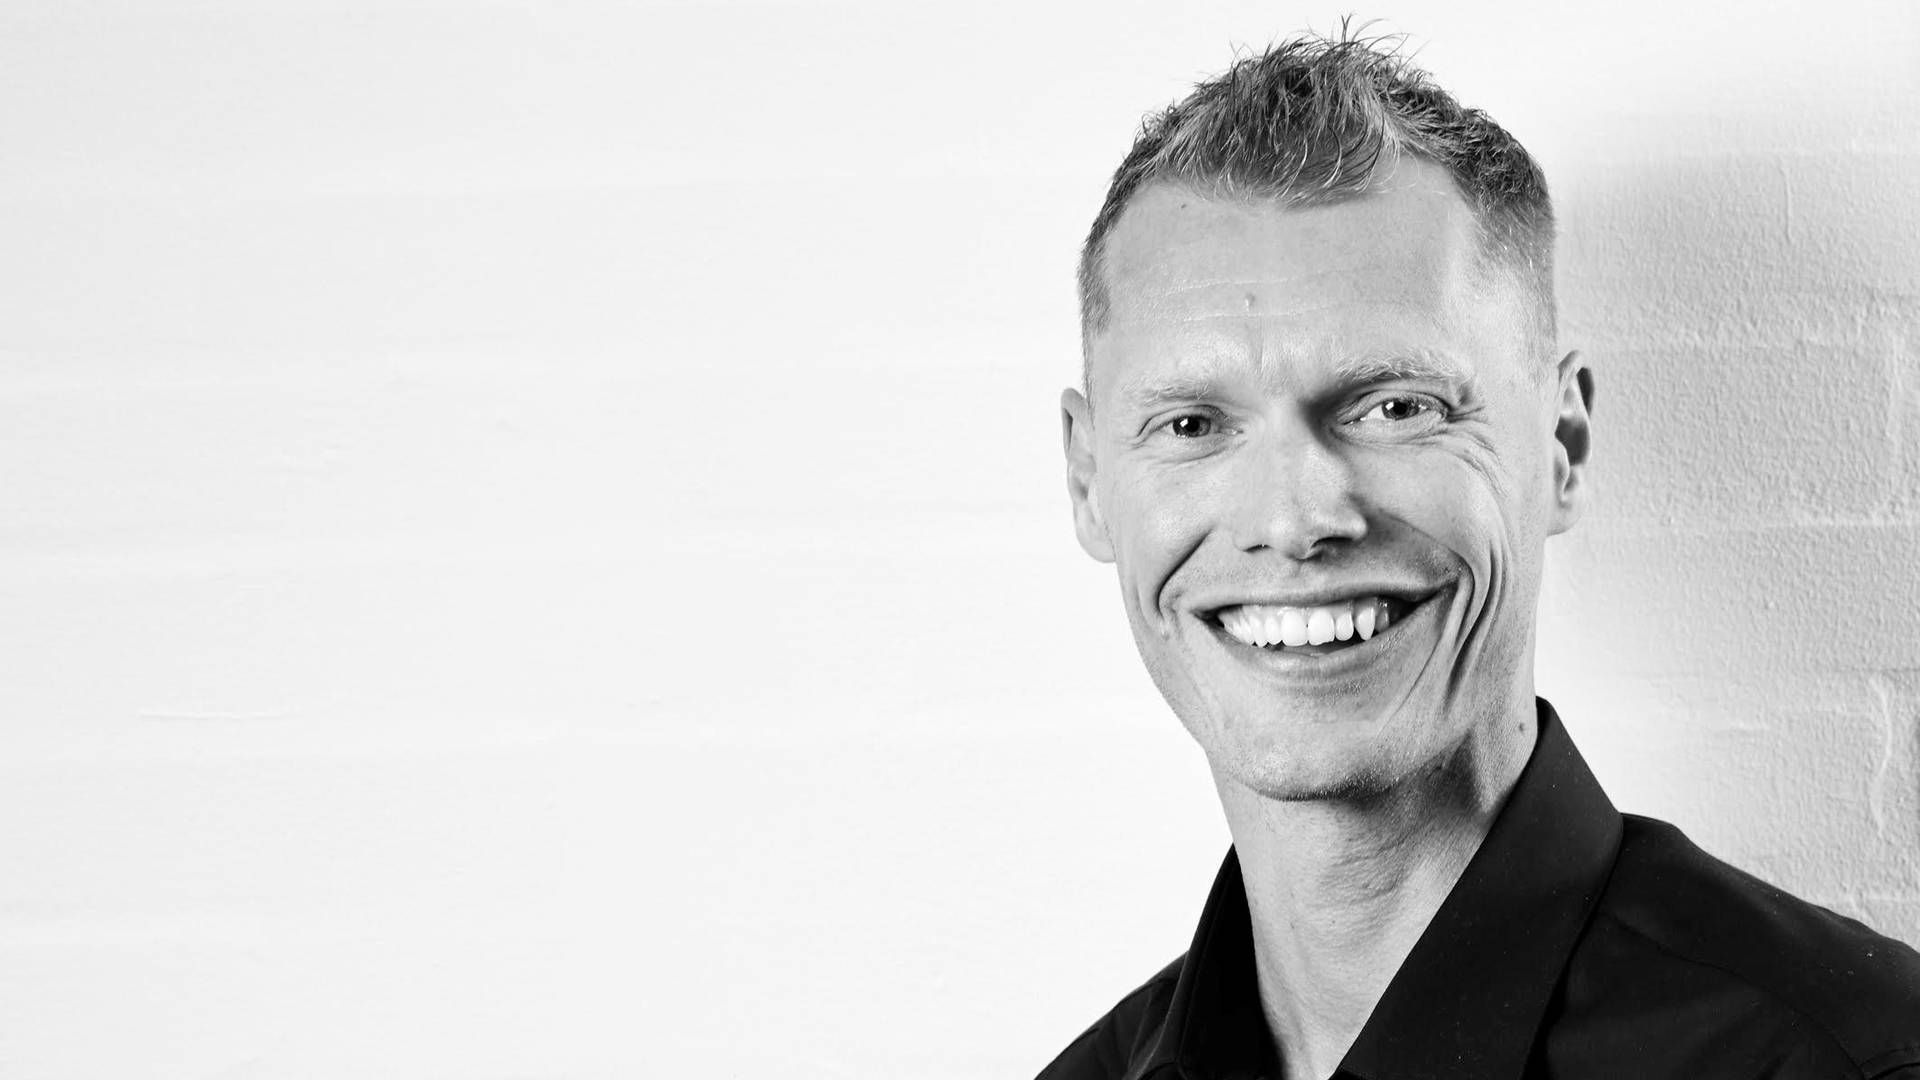 Thomas Nielsen startede i oktober som ny adm. direktør for Løvbjerg. Forinden var han i to år kædedirektør for discountkæden 365discount. | Foto: Privatfoto